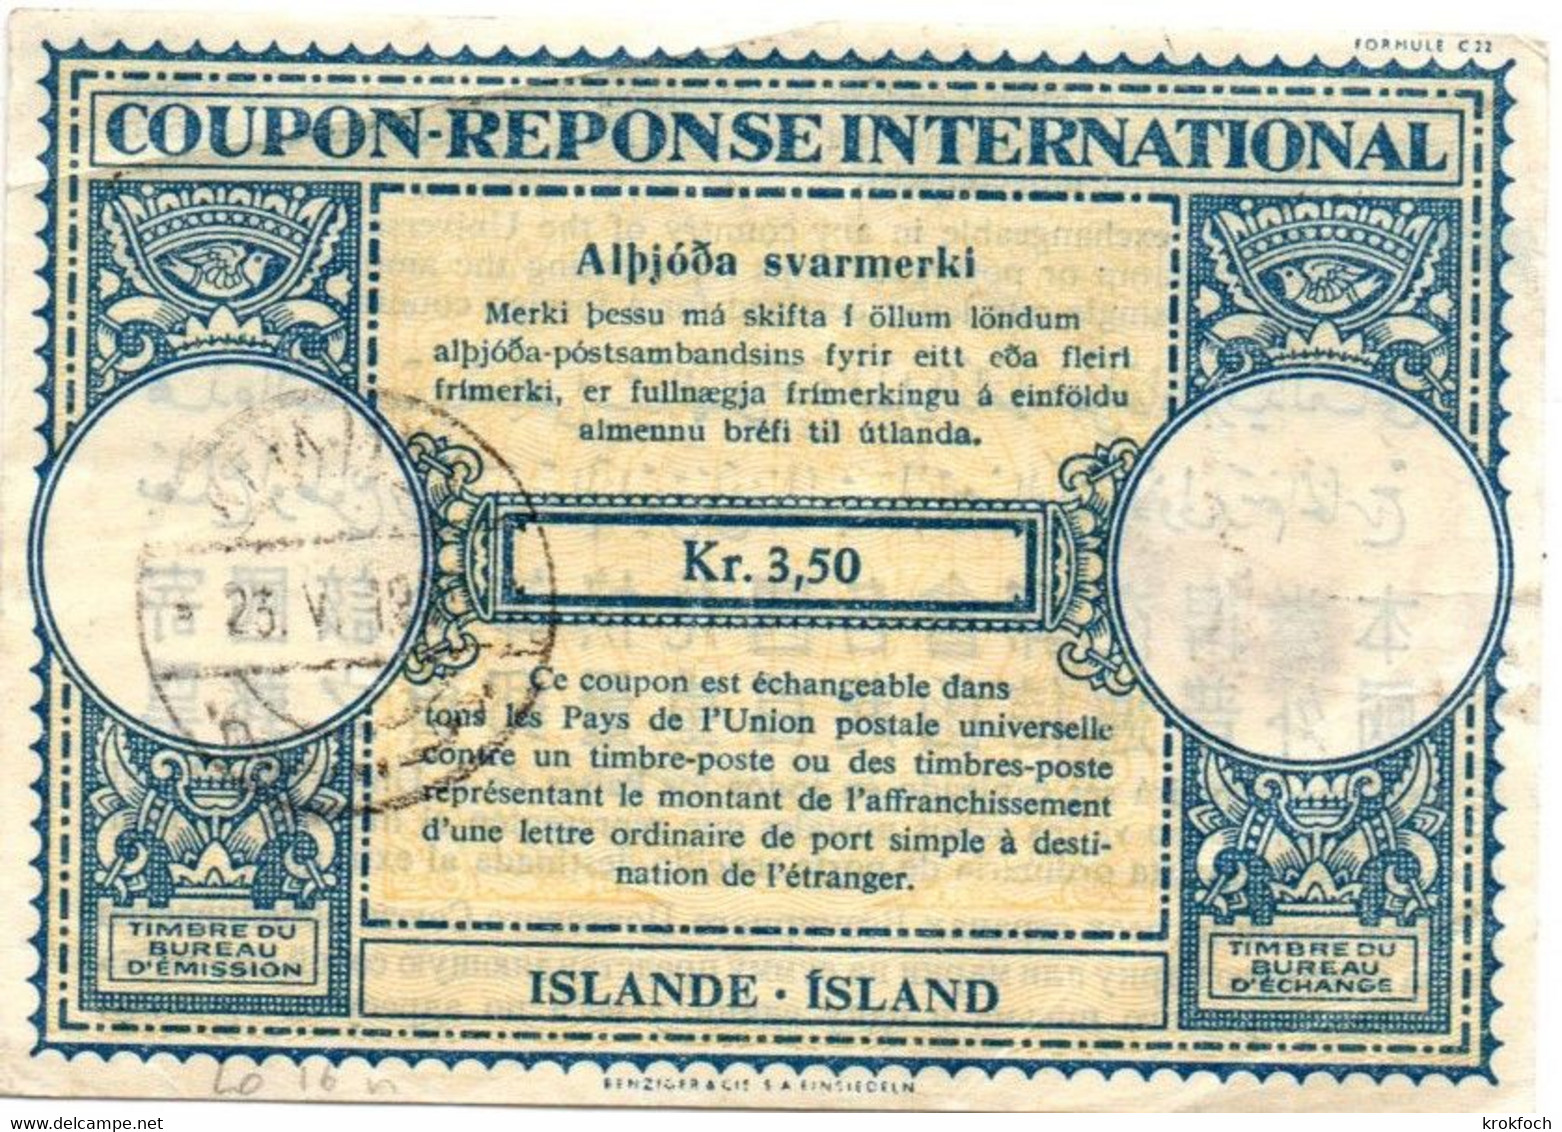 Coupon-réponse Islande Kr 3,50 Modèle Lo 16n - IRC CRI IAS - Postal Stationery